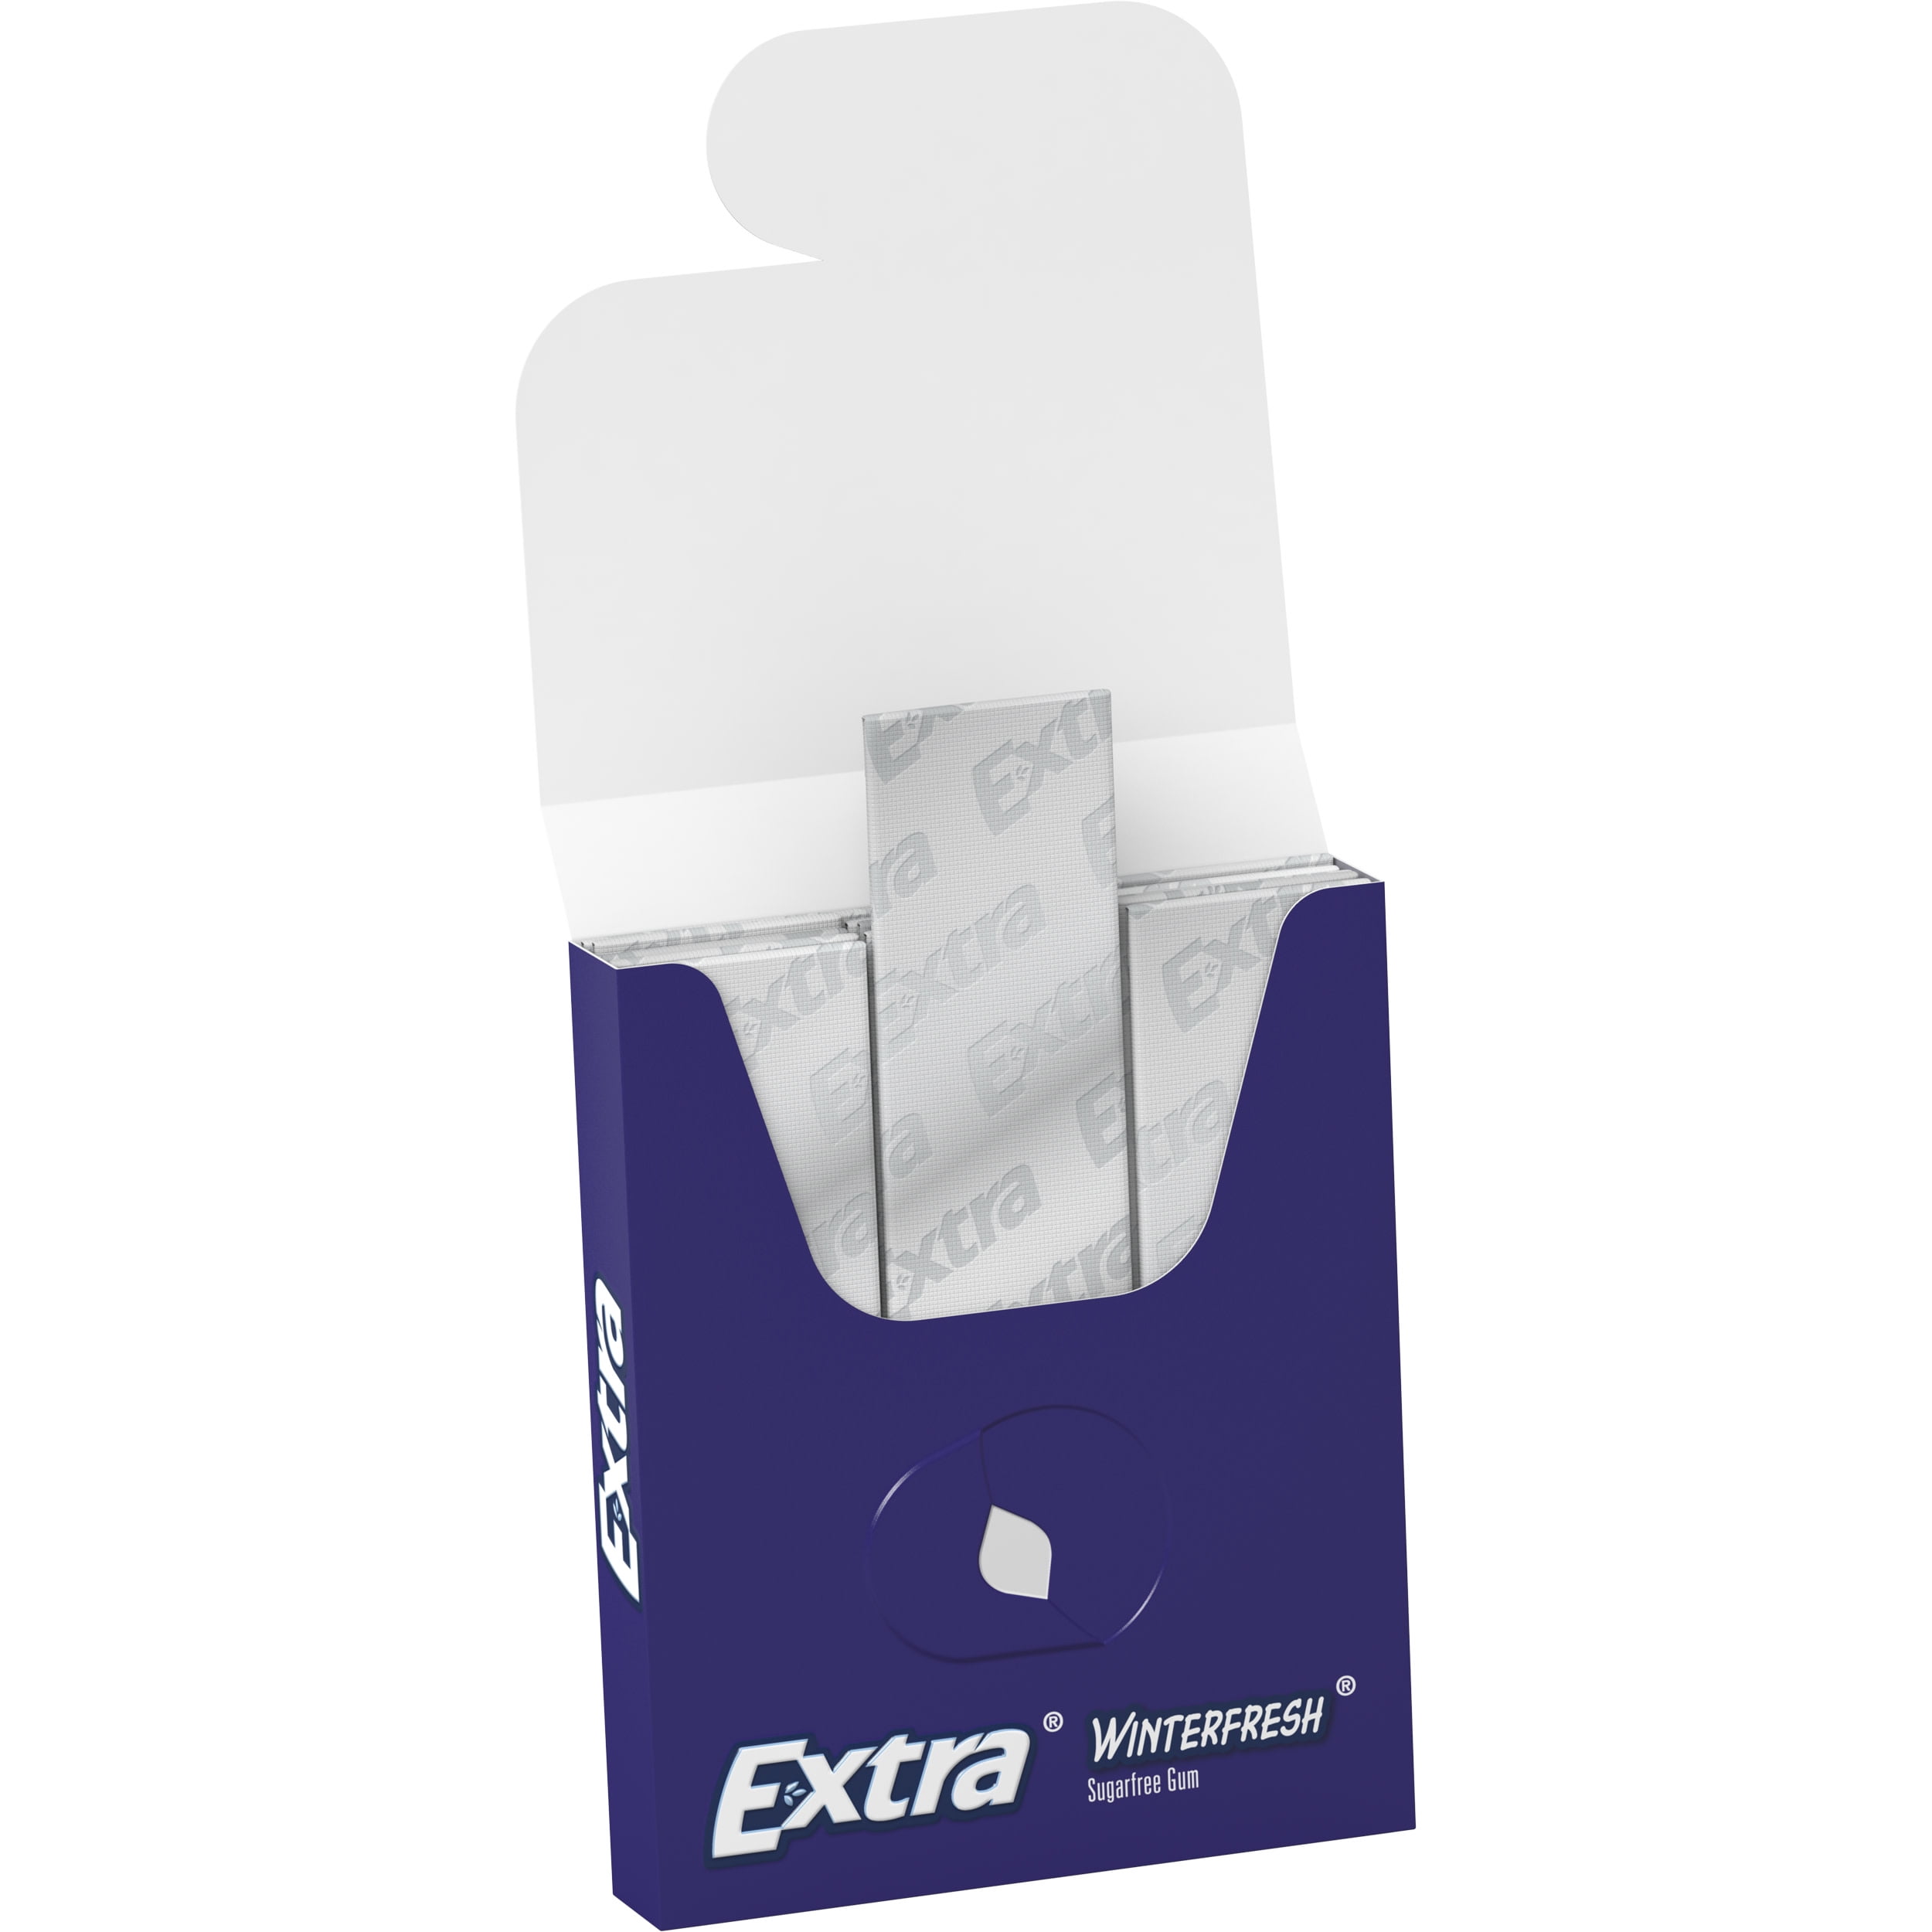 Extra Gum Winterfresh Sugar Chewing - 15 Stick (Pack of 3) - Walmart.com